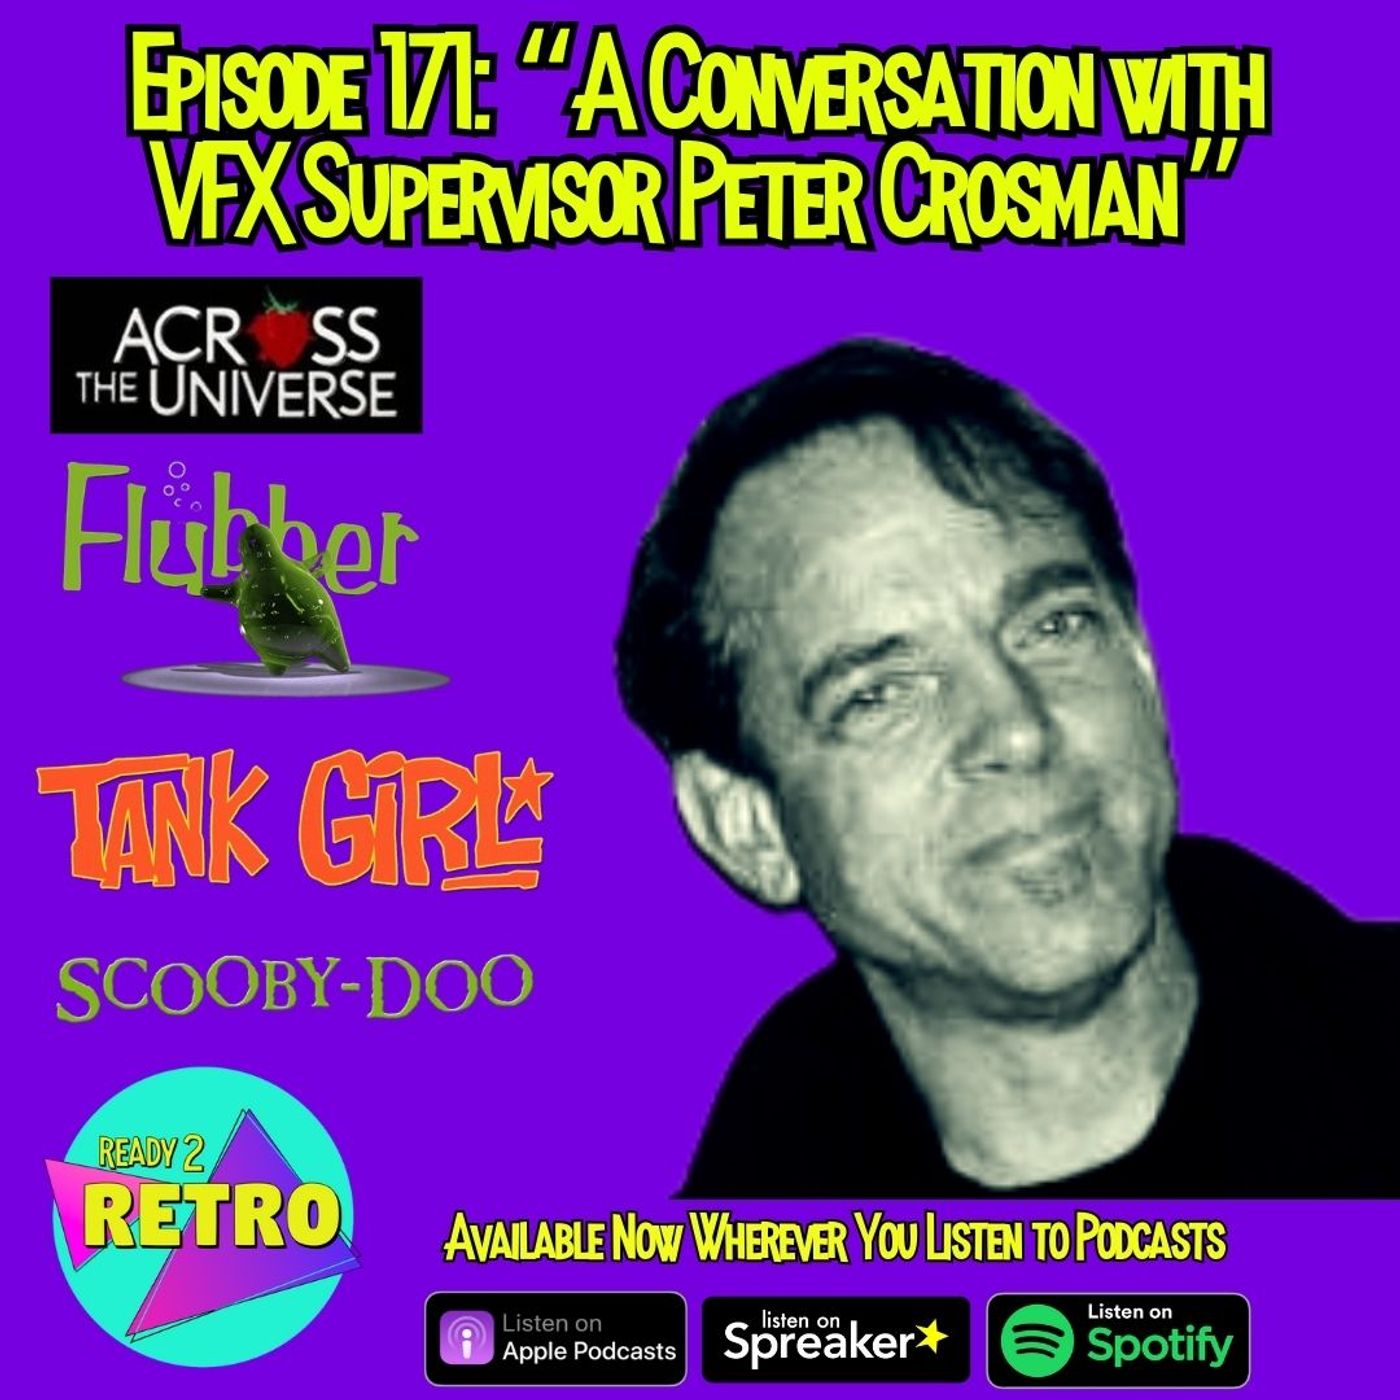 Episode 171” ”A Conversation with VFX Supervisor Peter Crosman”